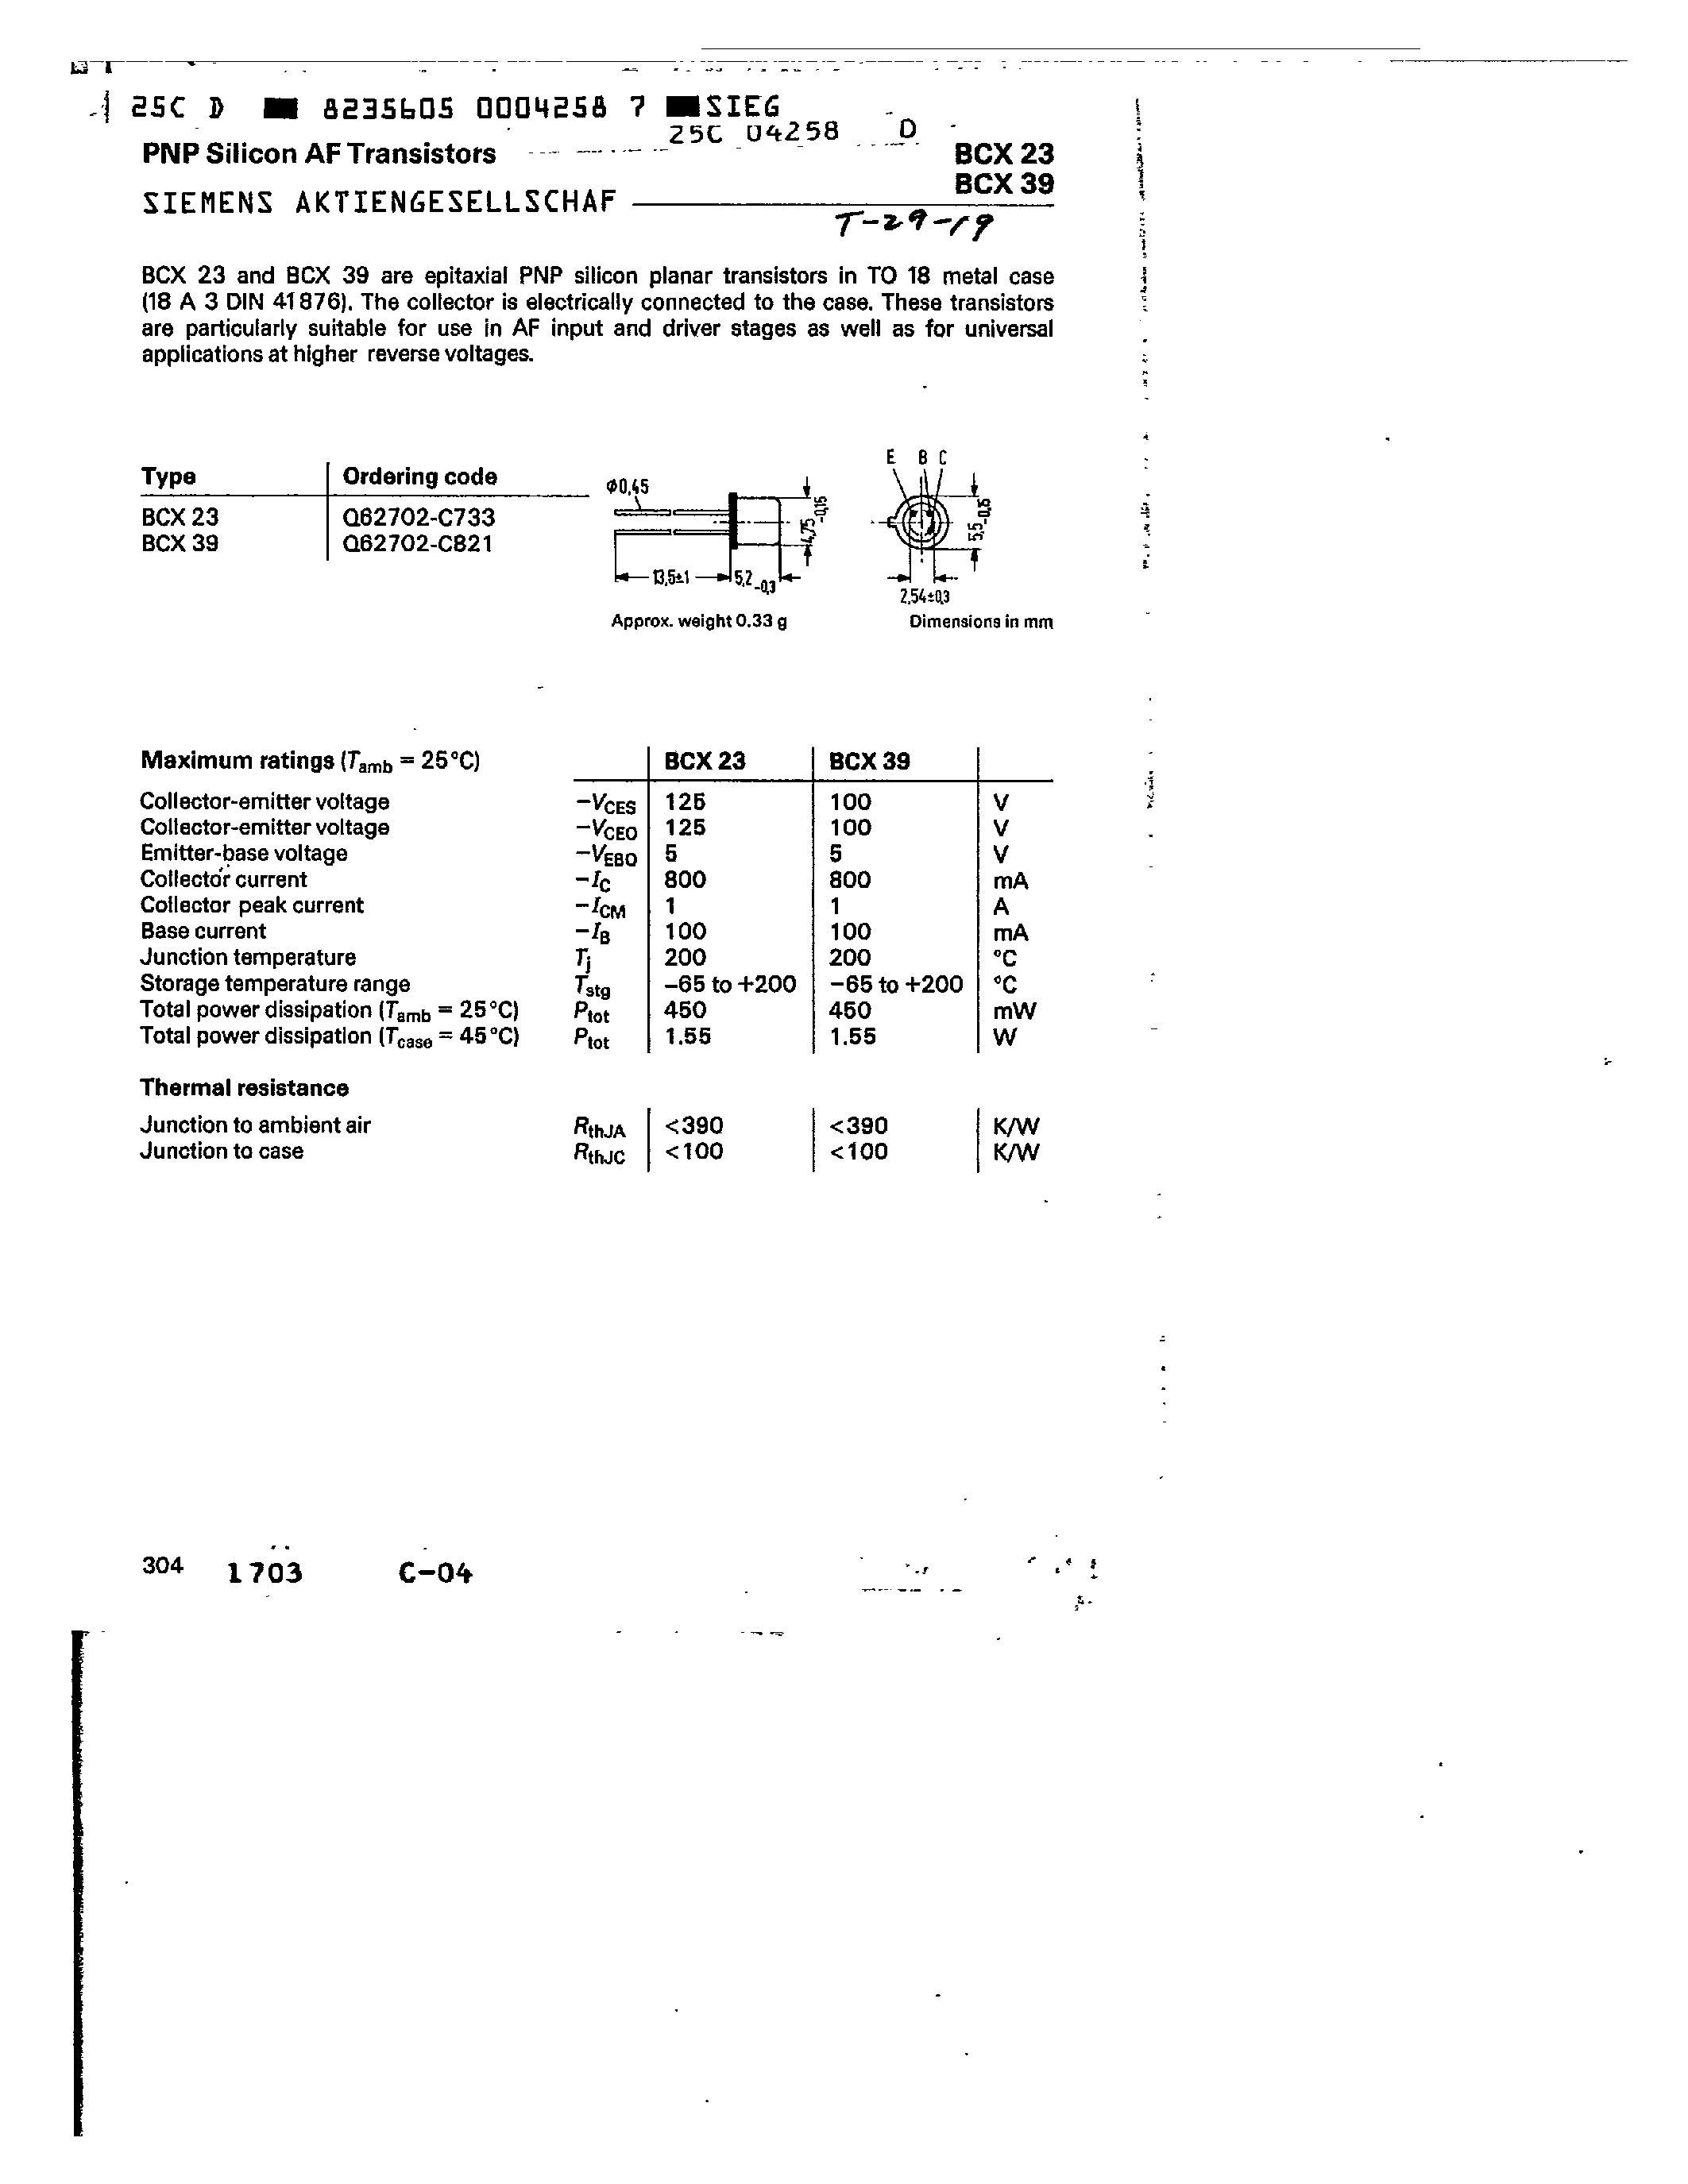 Datasheet BCX39 - PNP SILICON AF TRANSISTORS page 1